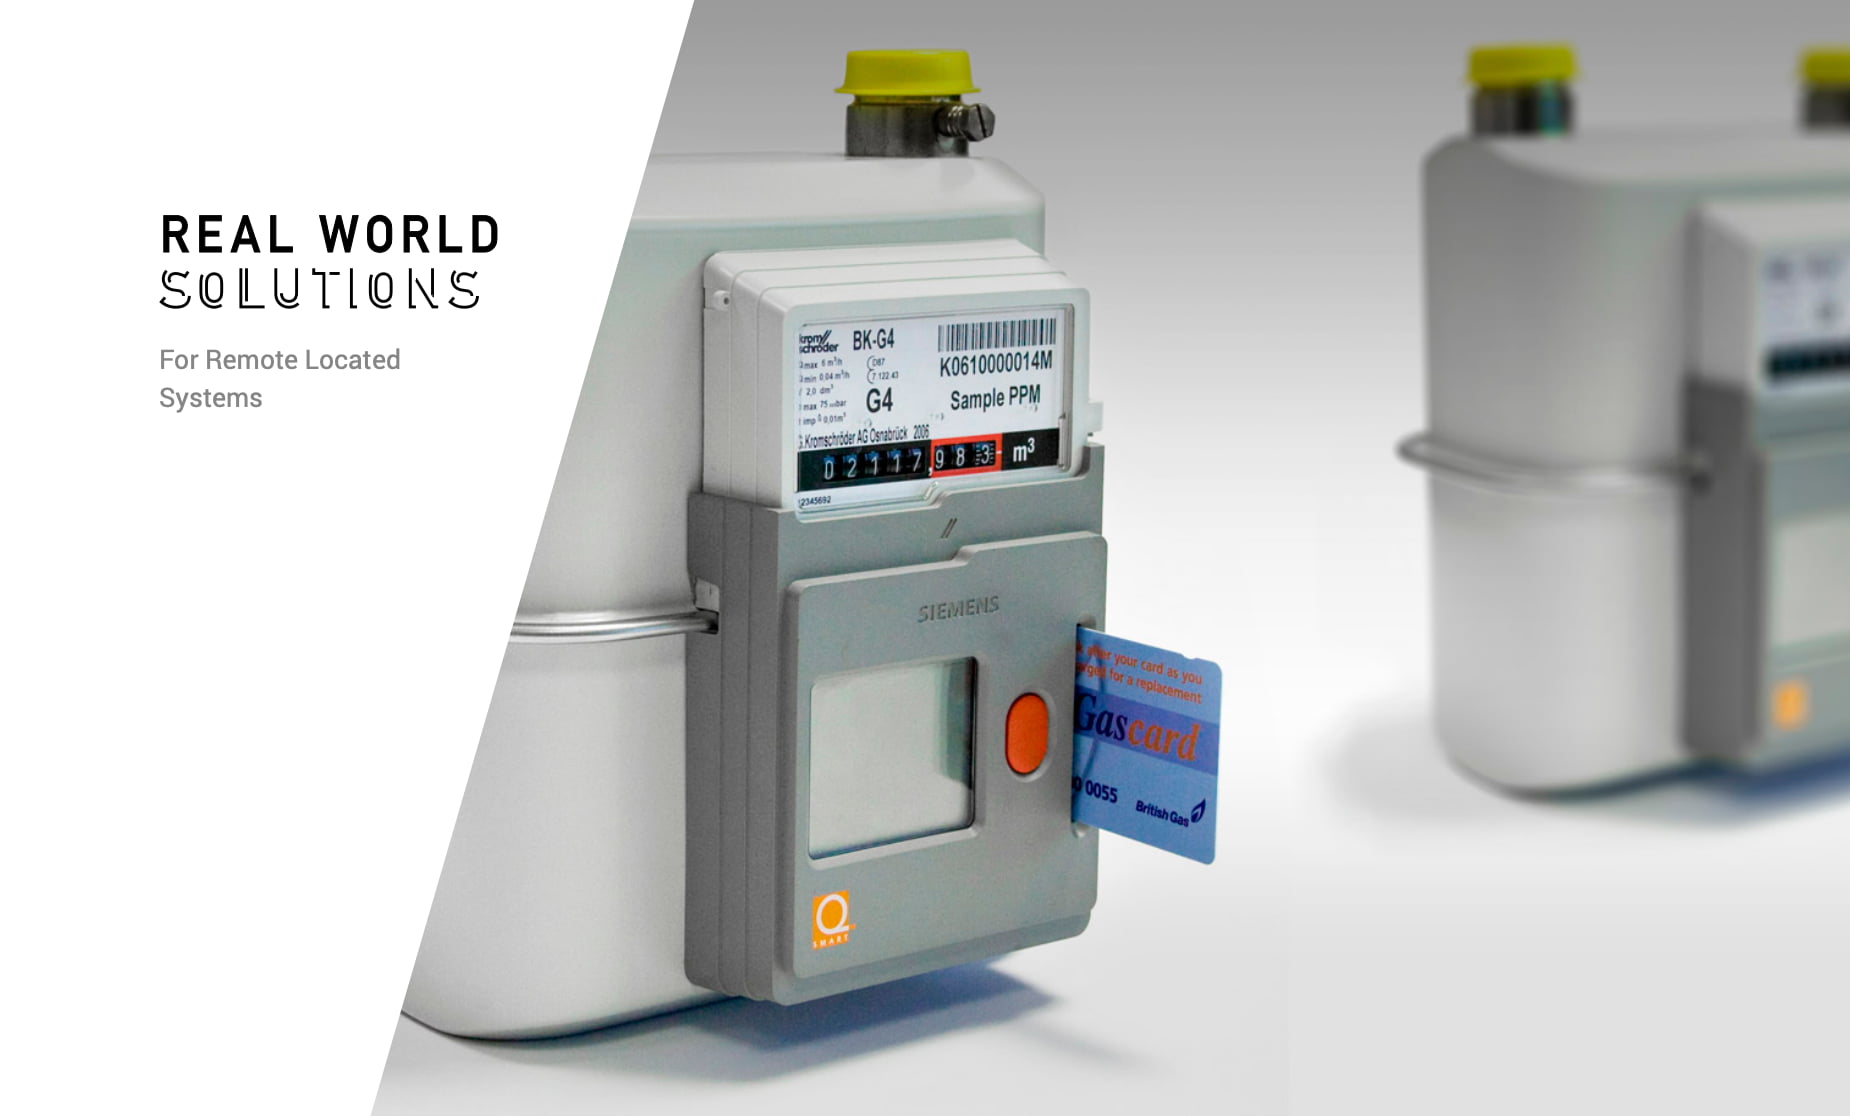 Ultra-low power smart gas meter